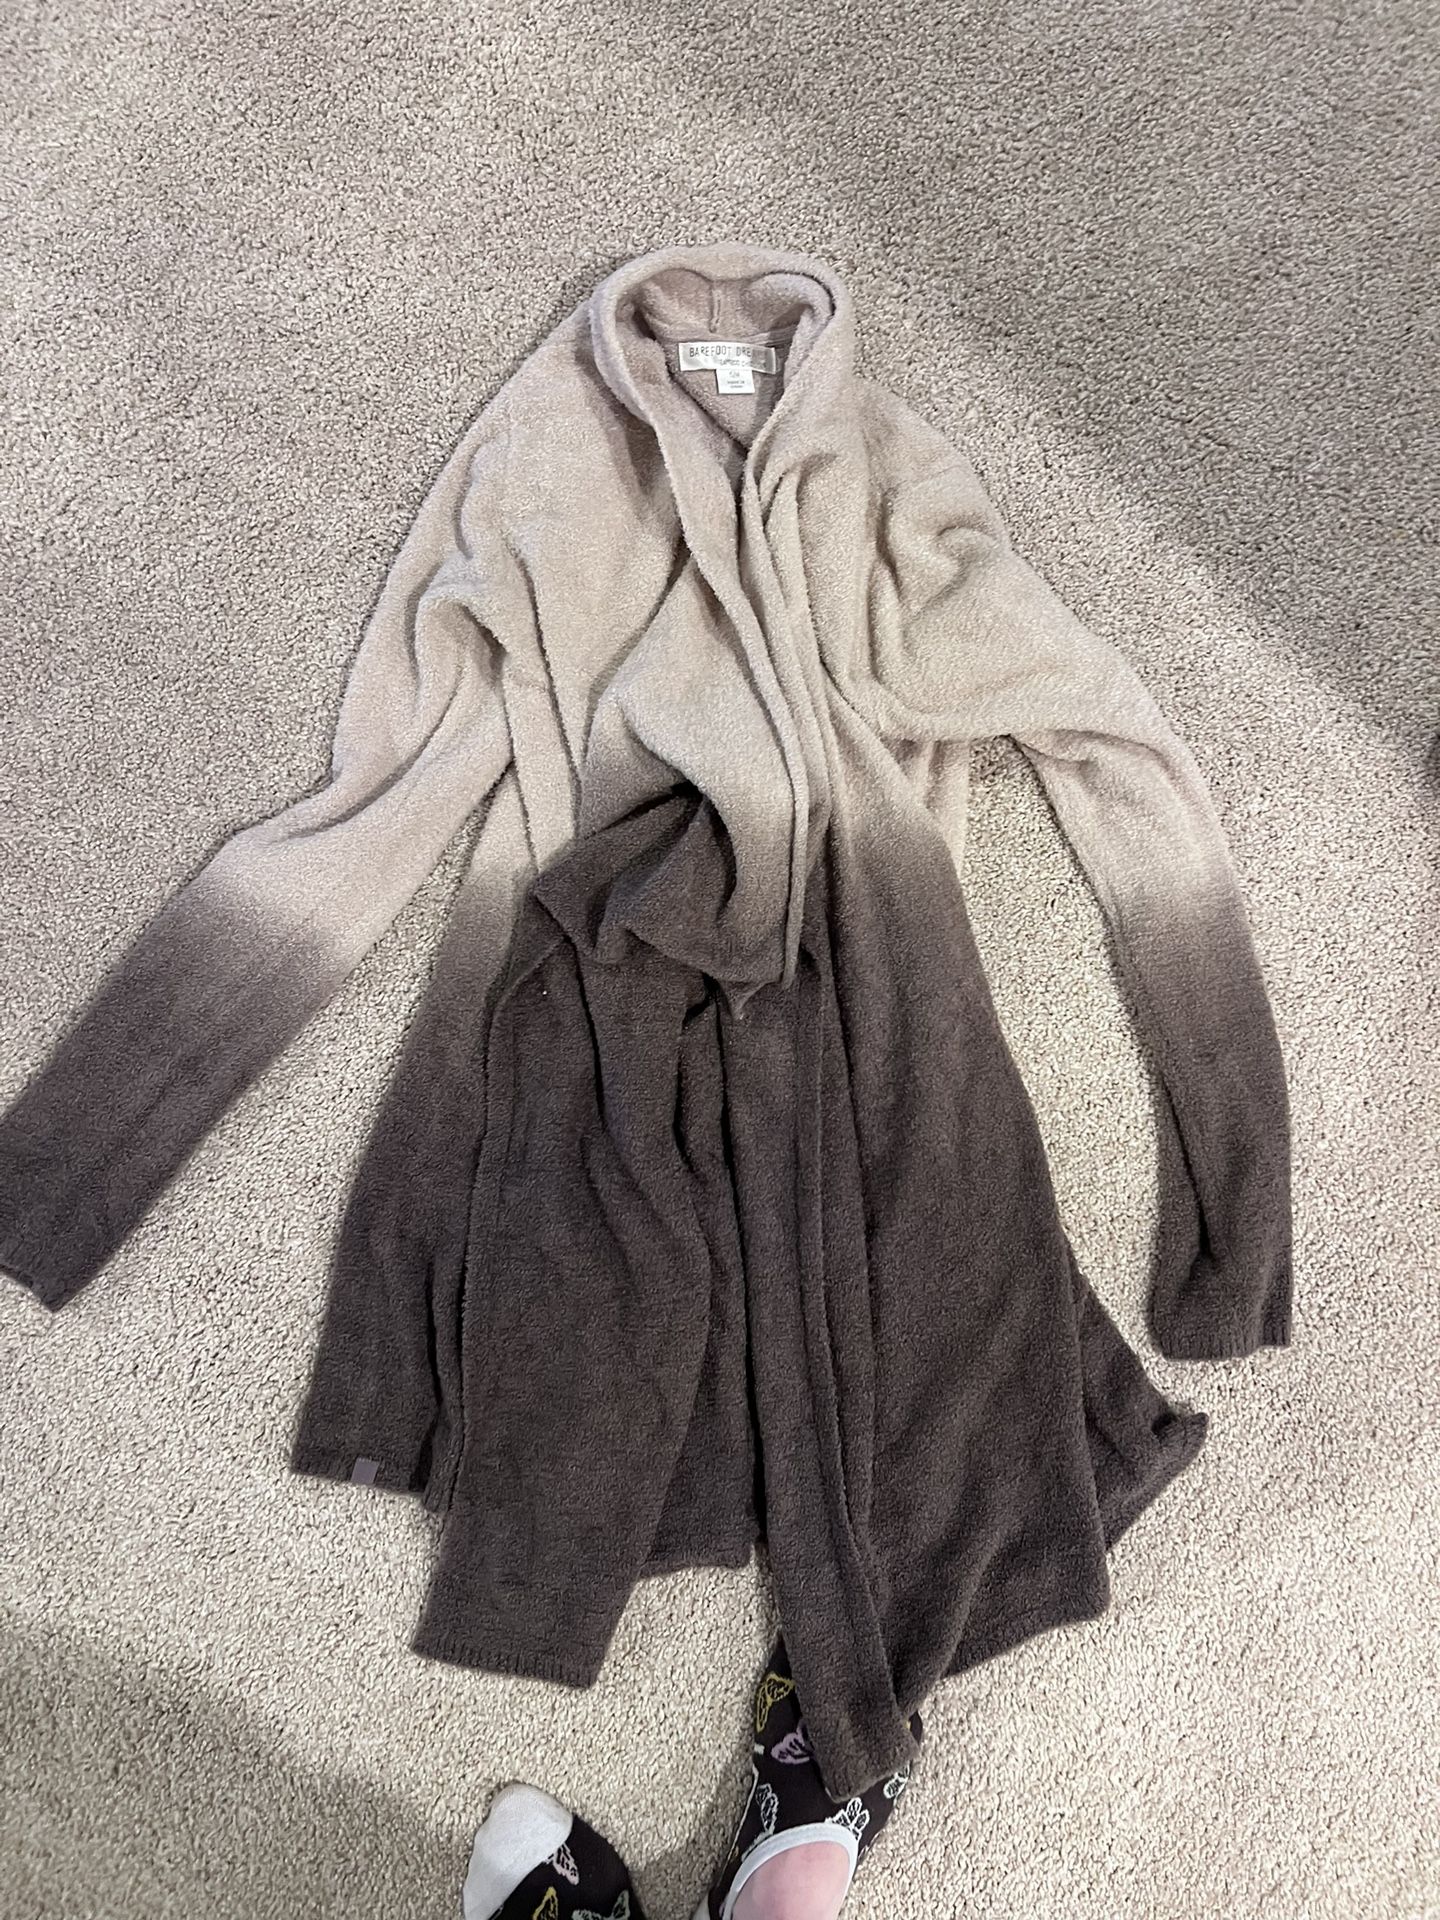 Woman’s Clothes Medium: Sweater, Jacket, Dress